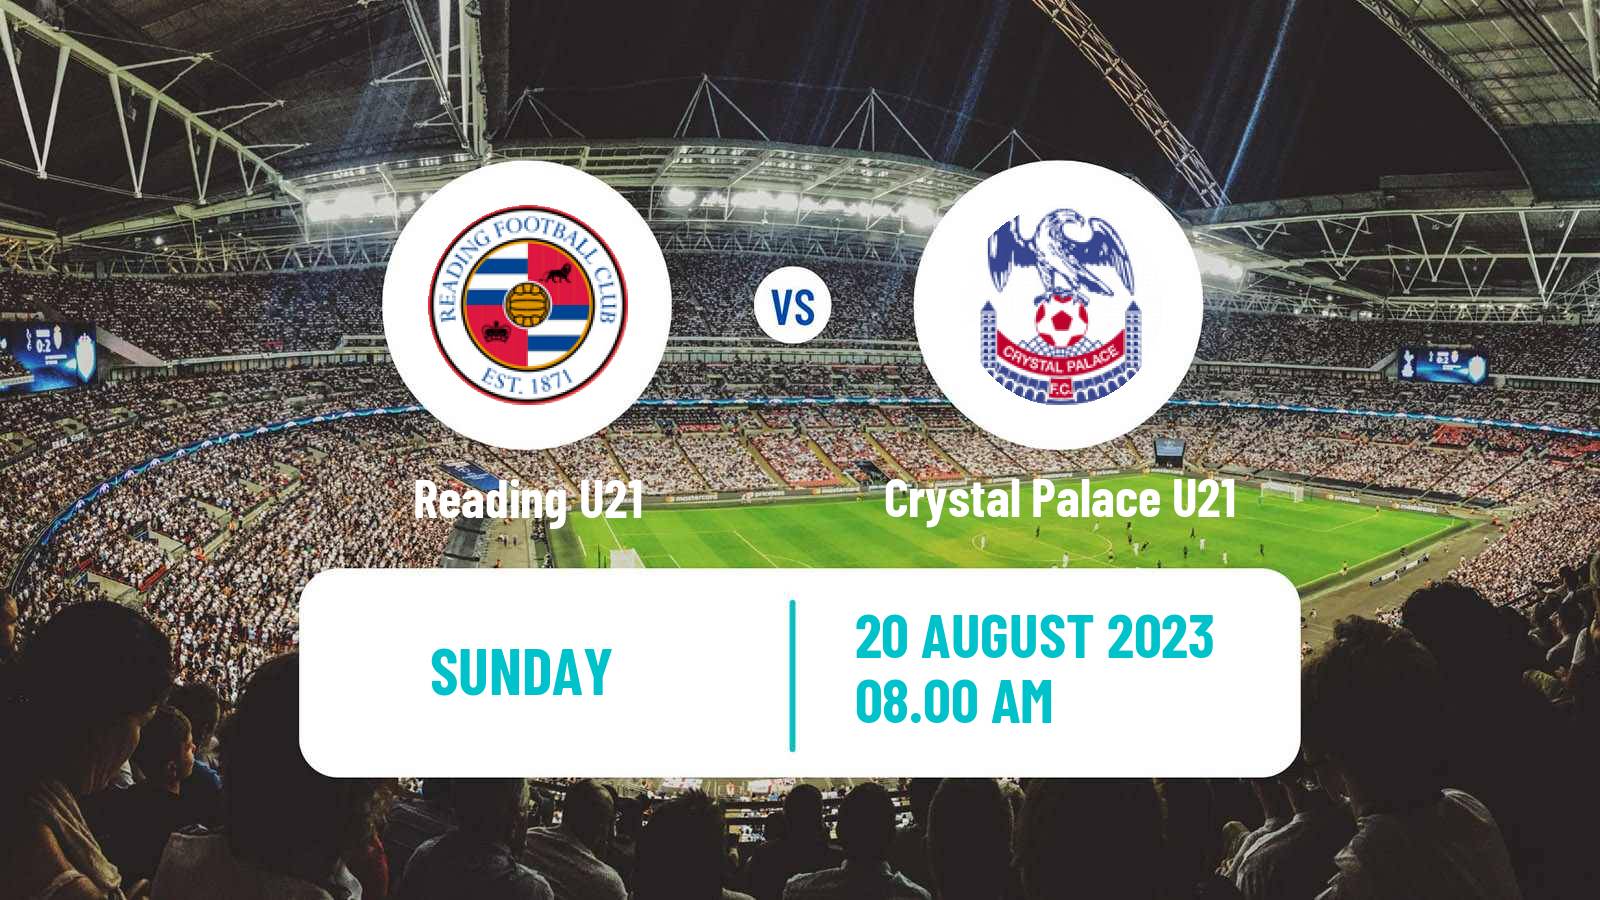 Soccer English Premier League 2 Reading U21 - Crystal Palace U21